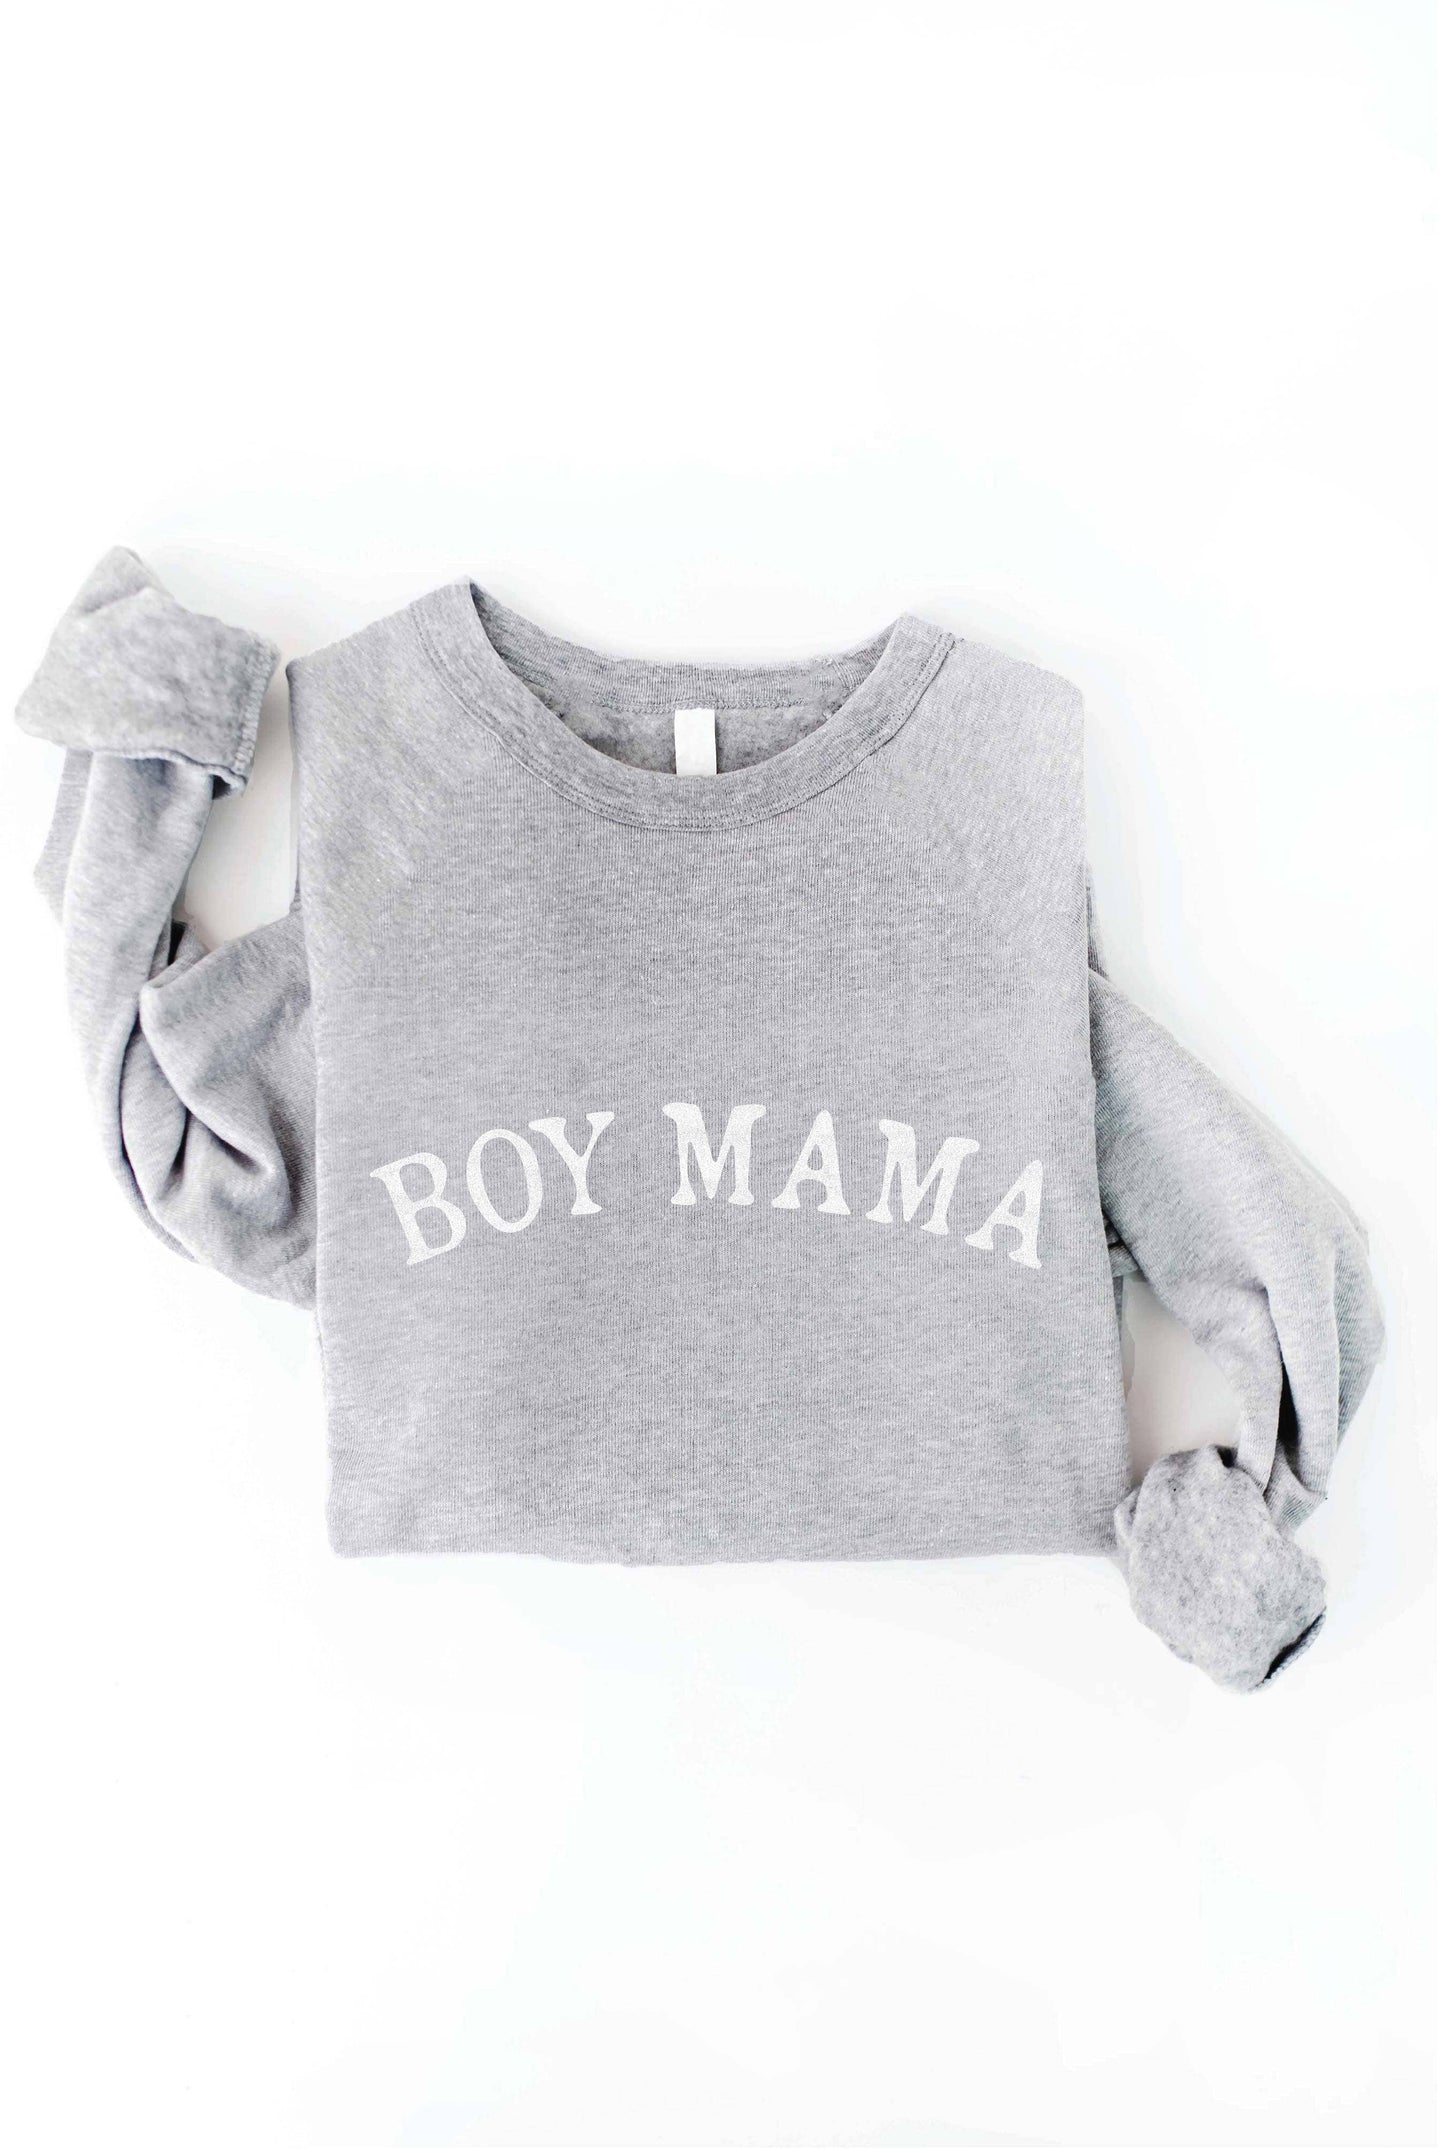 BOY MAMA Graphic Sweatshirt: M / HEATHER DUST